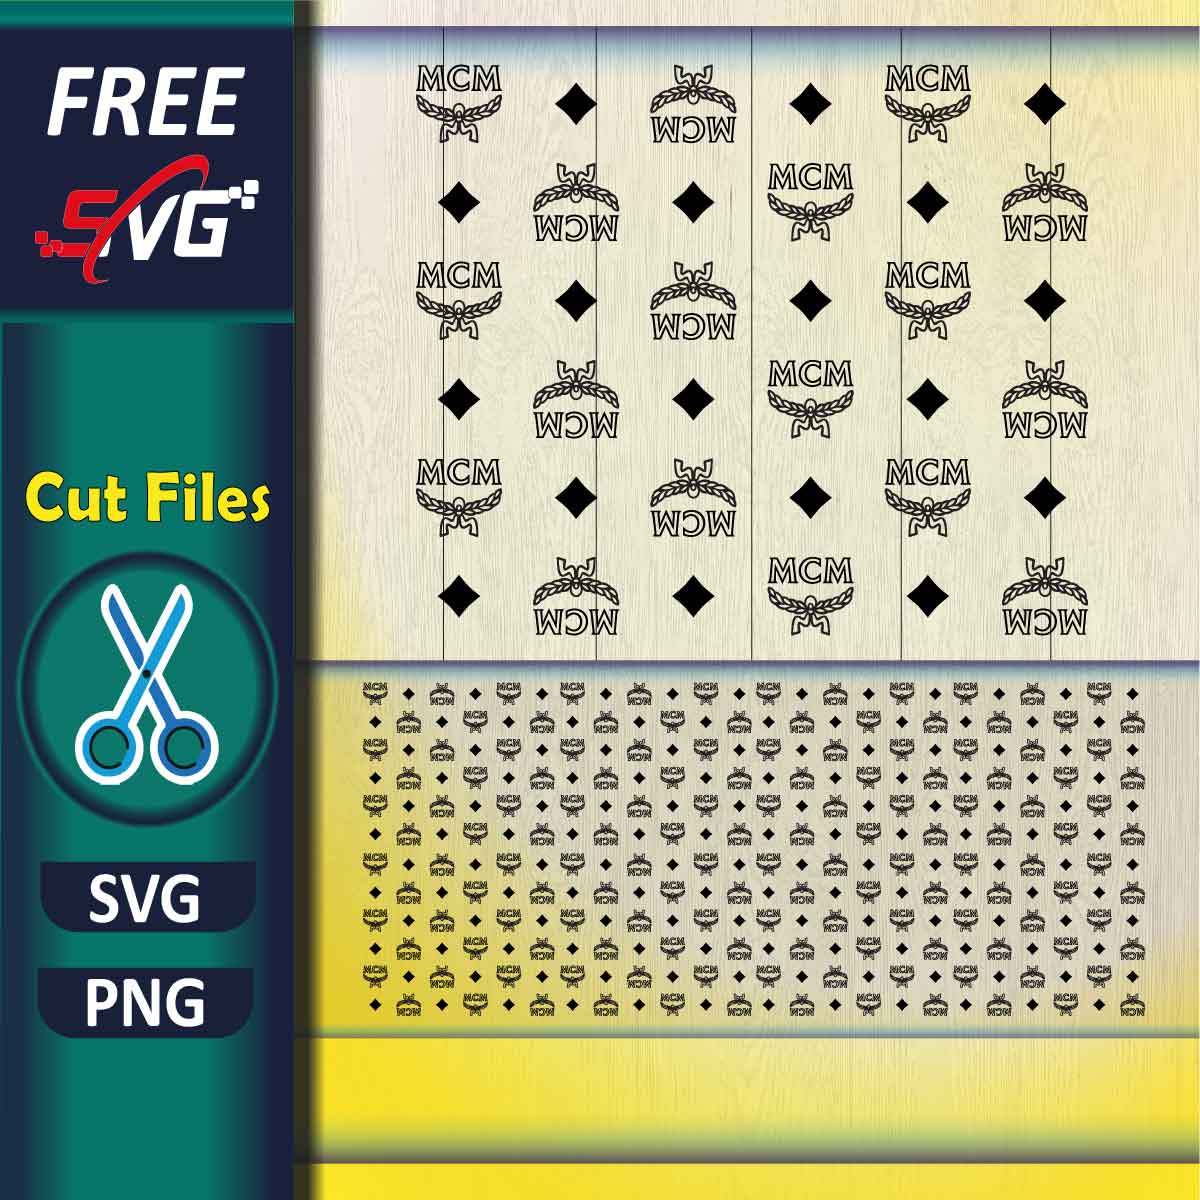 MCM Logo SVG Free, Cut files for Cricut